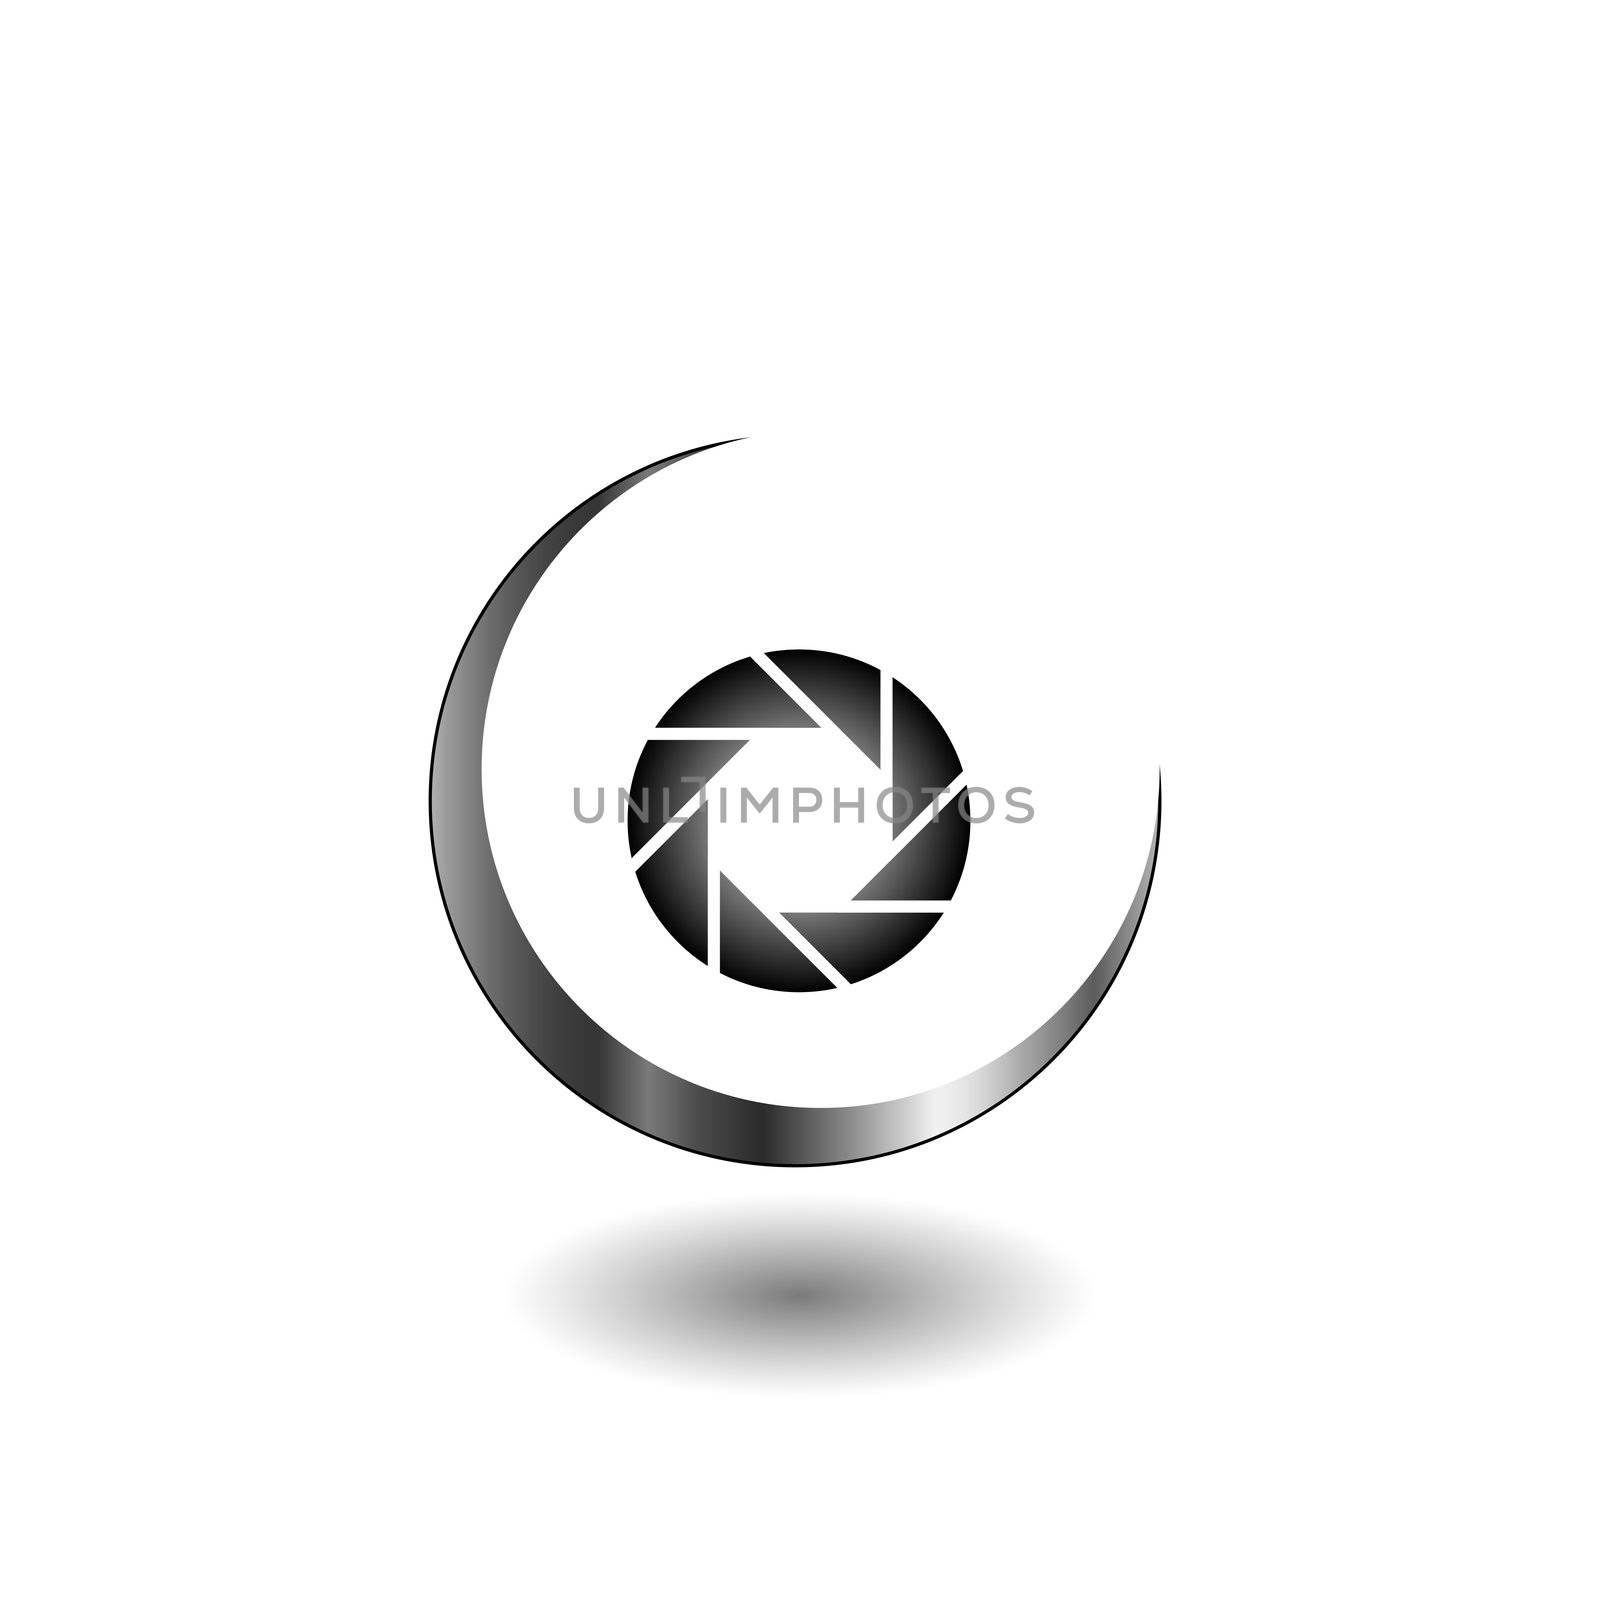 Photography logo by shawlinmohd